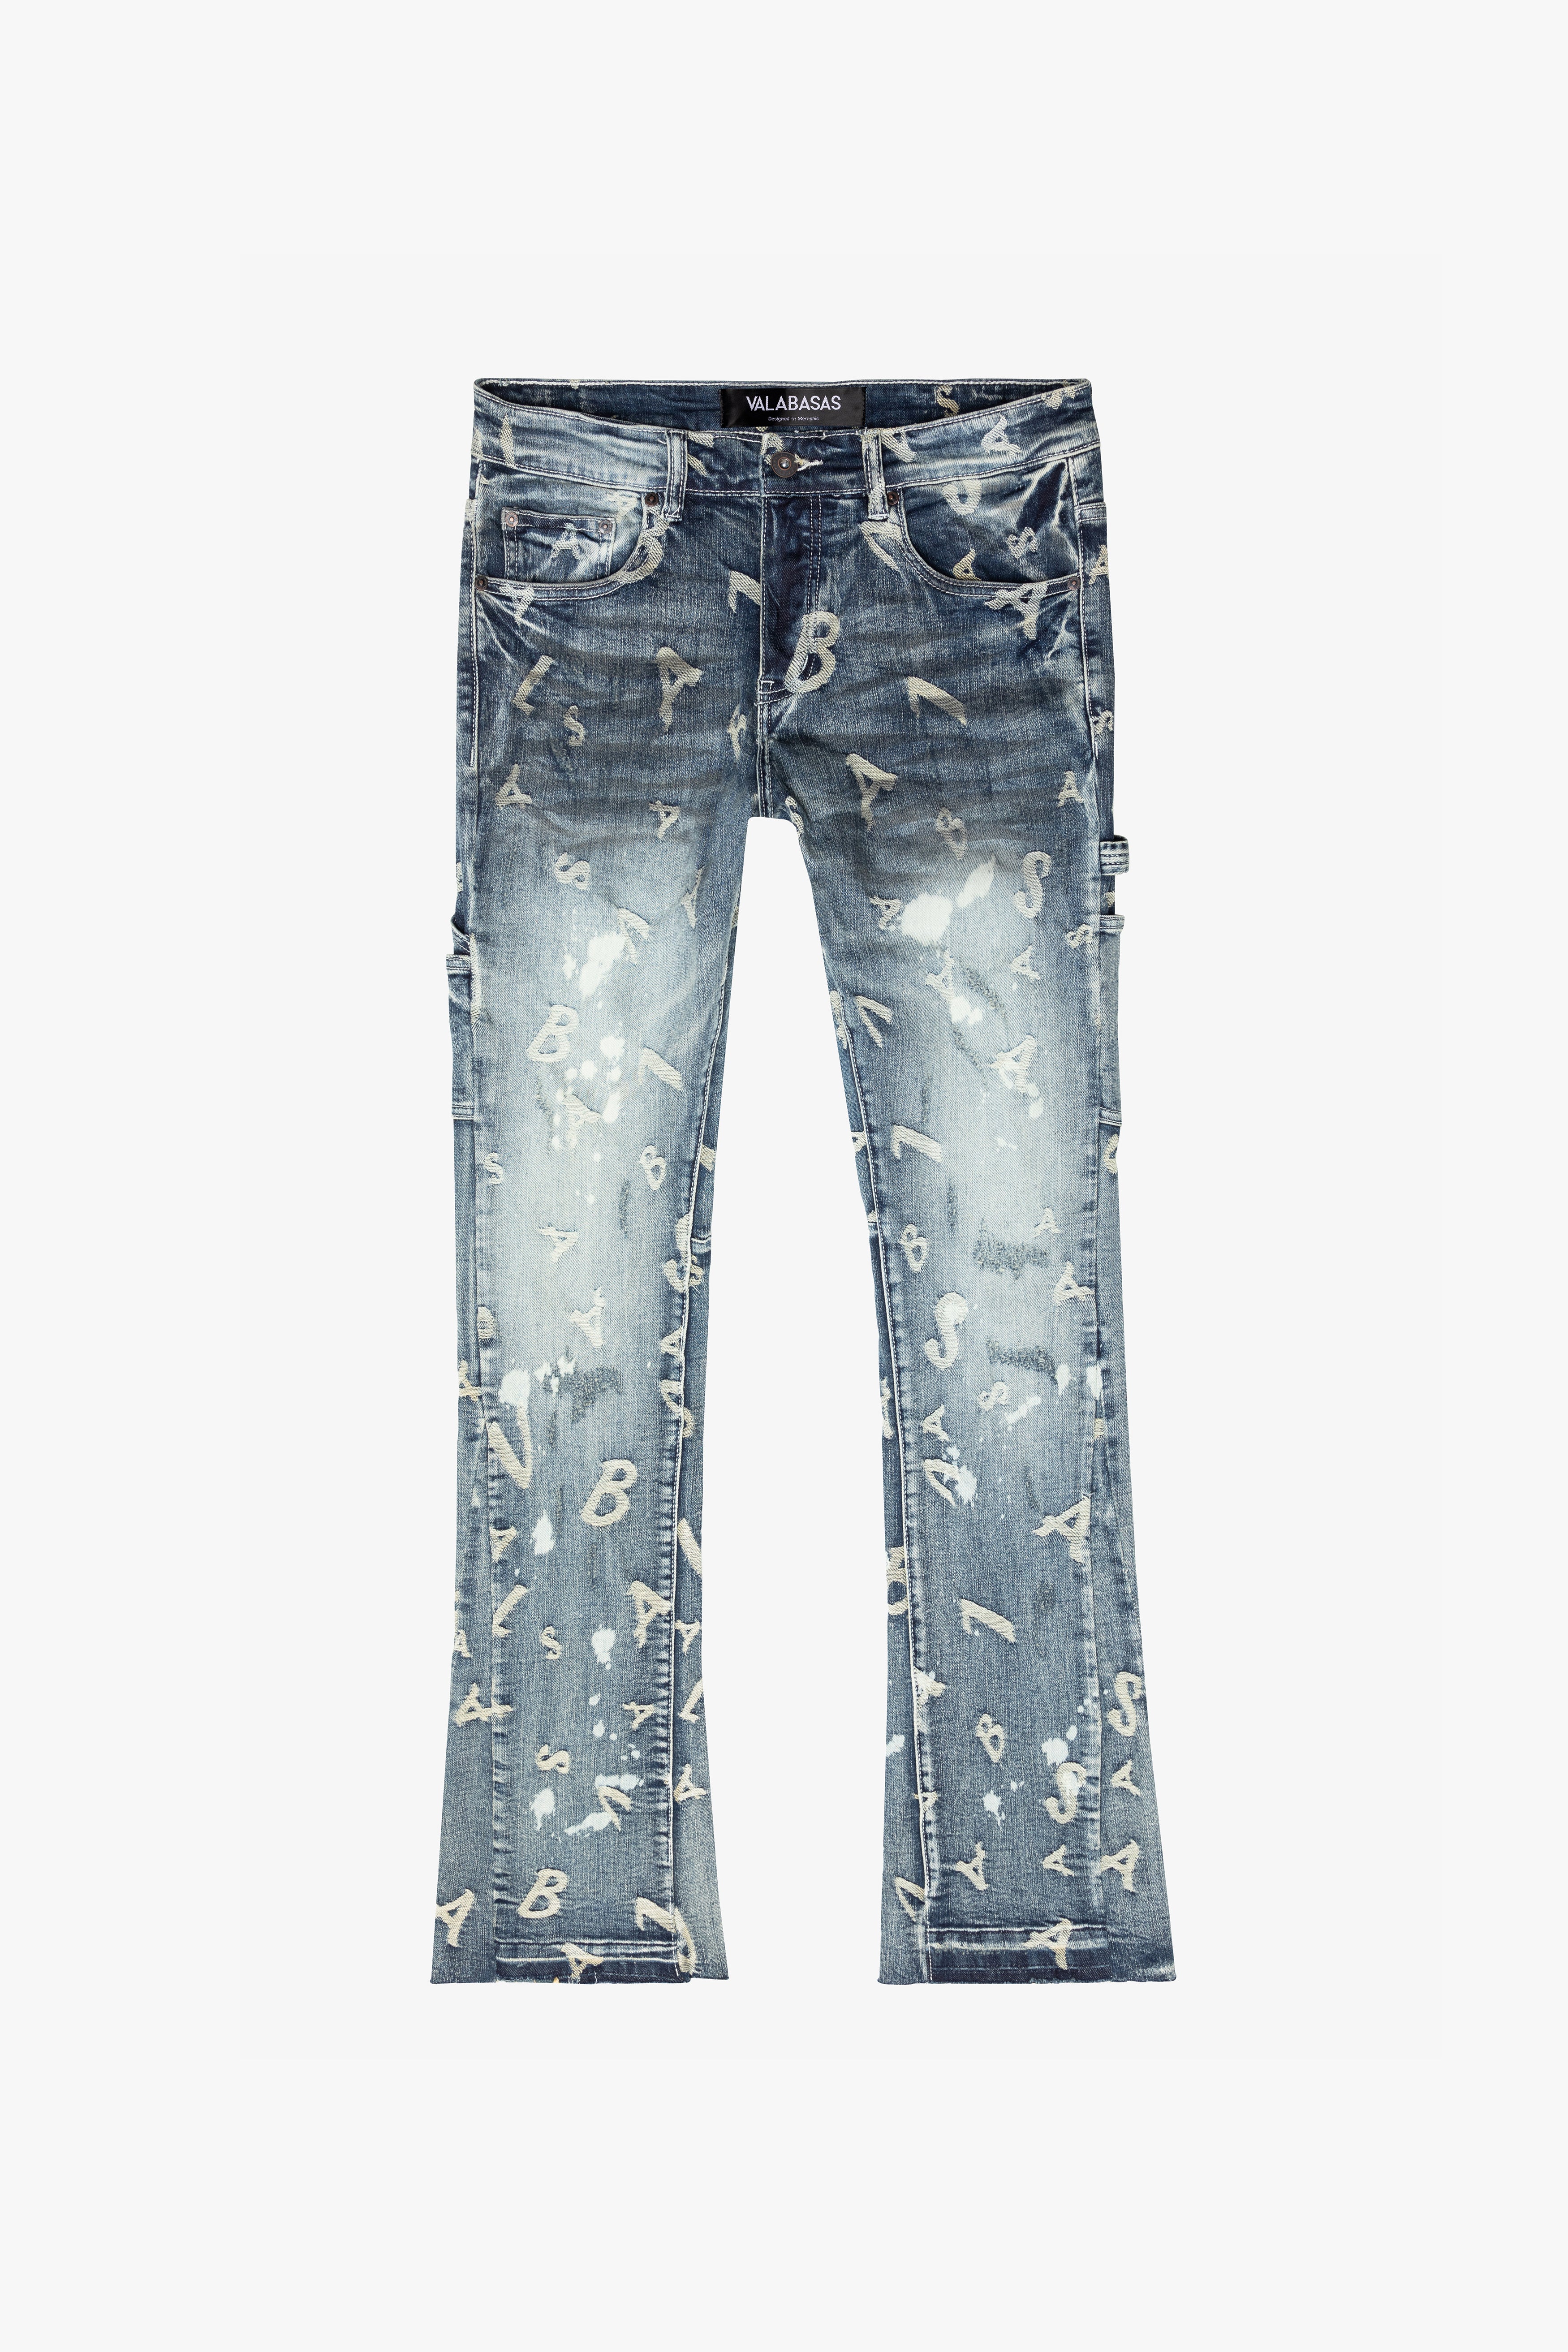 Plain Mens Bell Bottom Denim Jeans, Bootcut, Blue at Rs 799/piece in Nala  Sopara